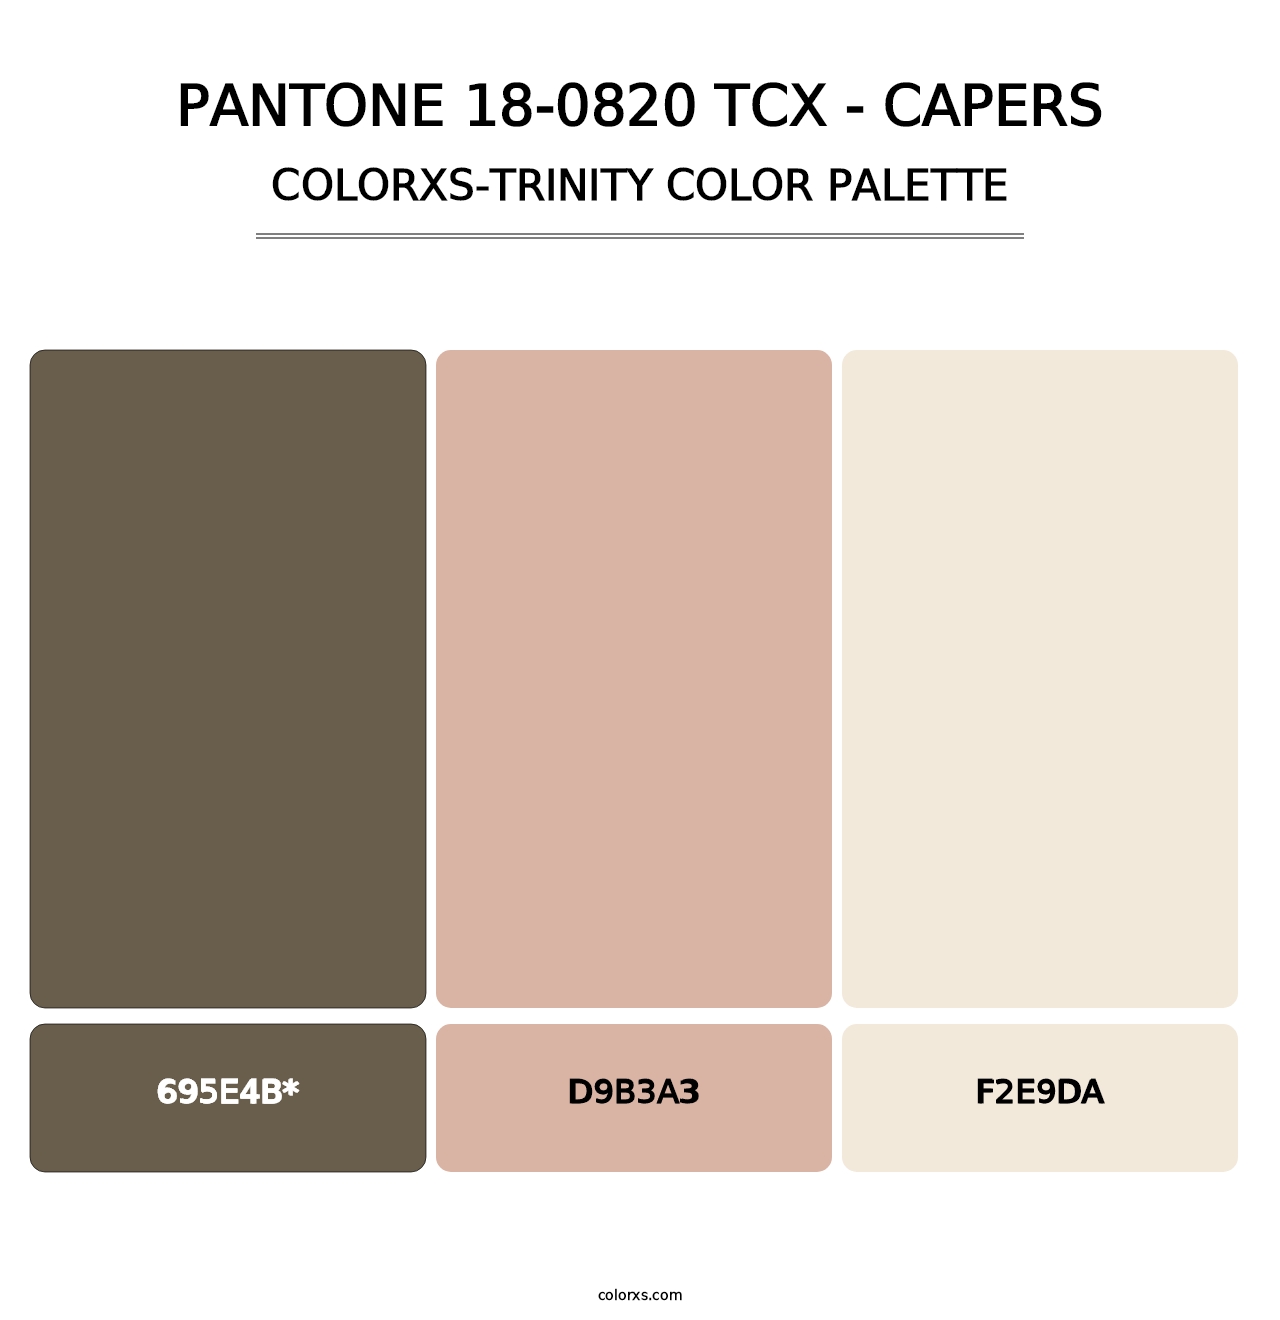 PANTONE 18-0820 TCX - Capers - Colorxs Trinity Palette